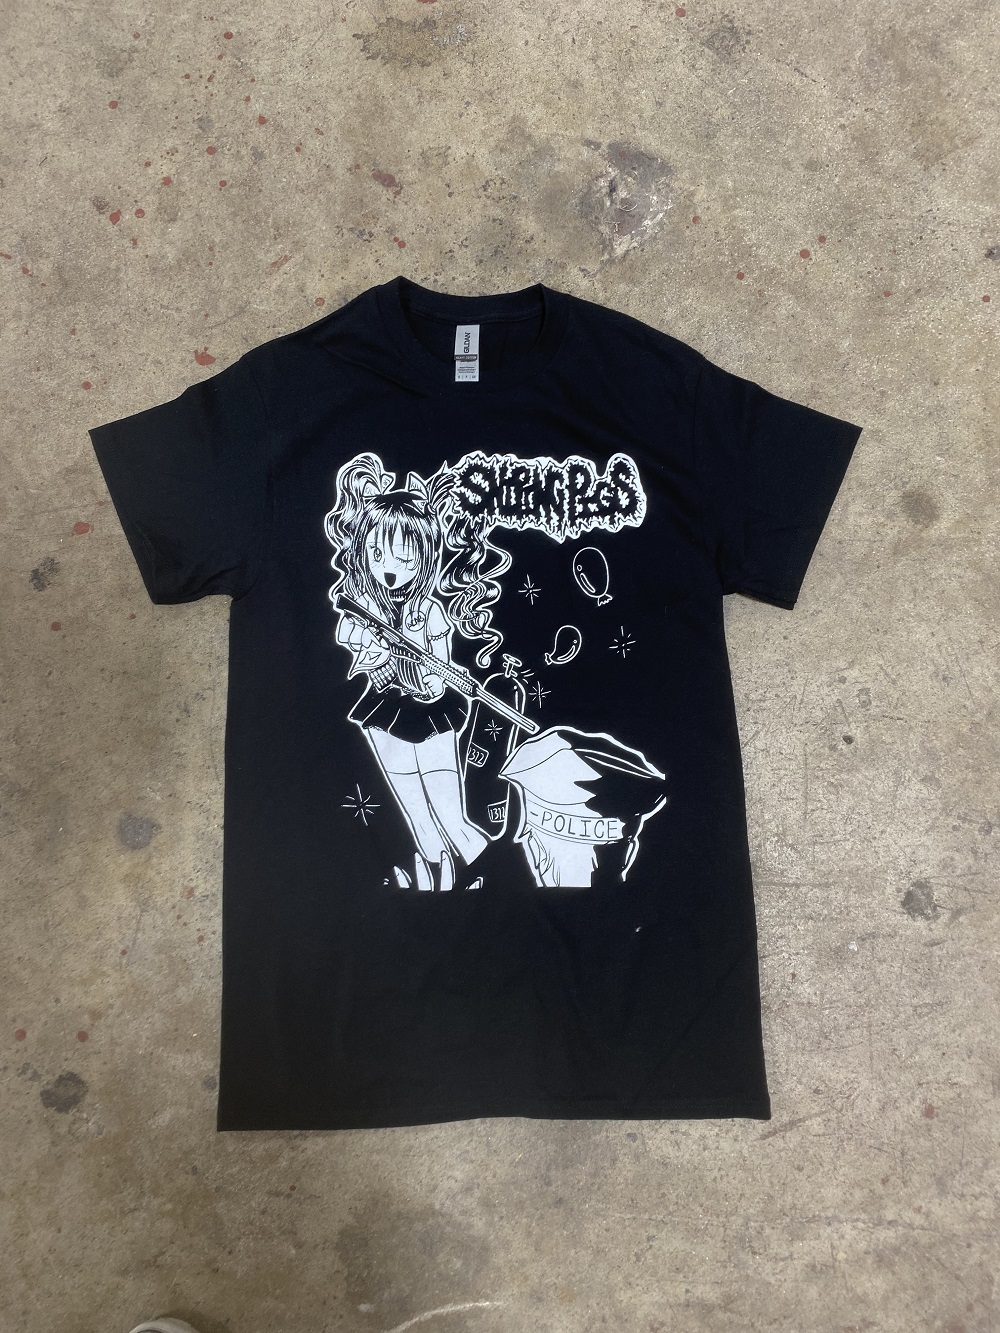 Sniping Pigs - Mincess Shirt (LARGE)